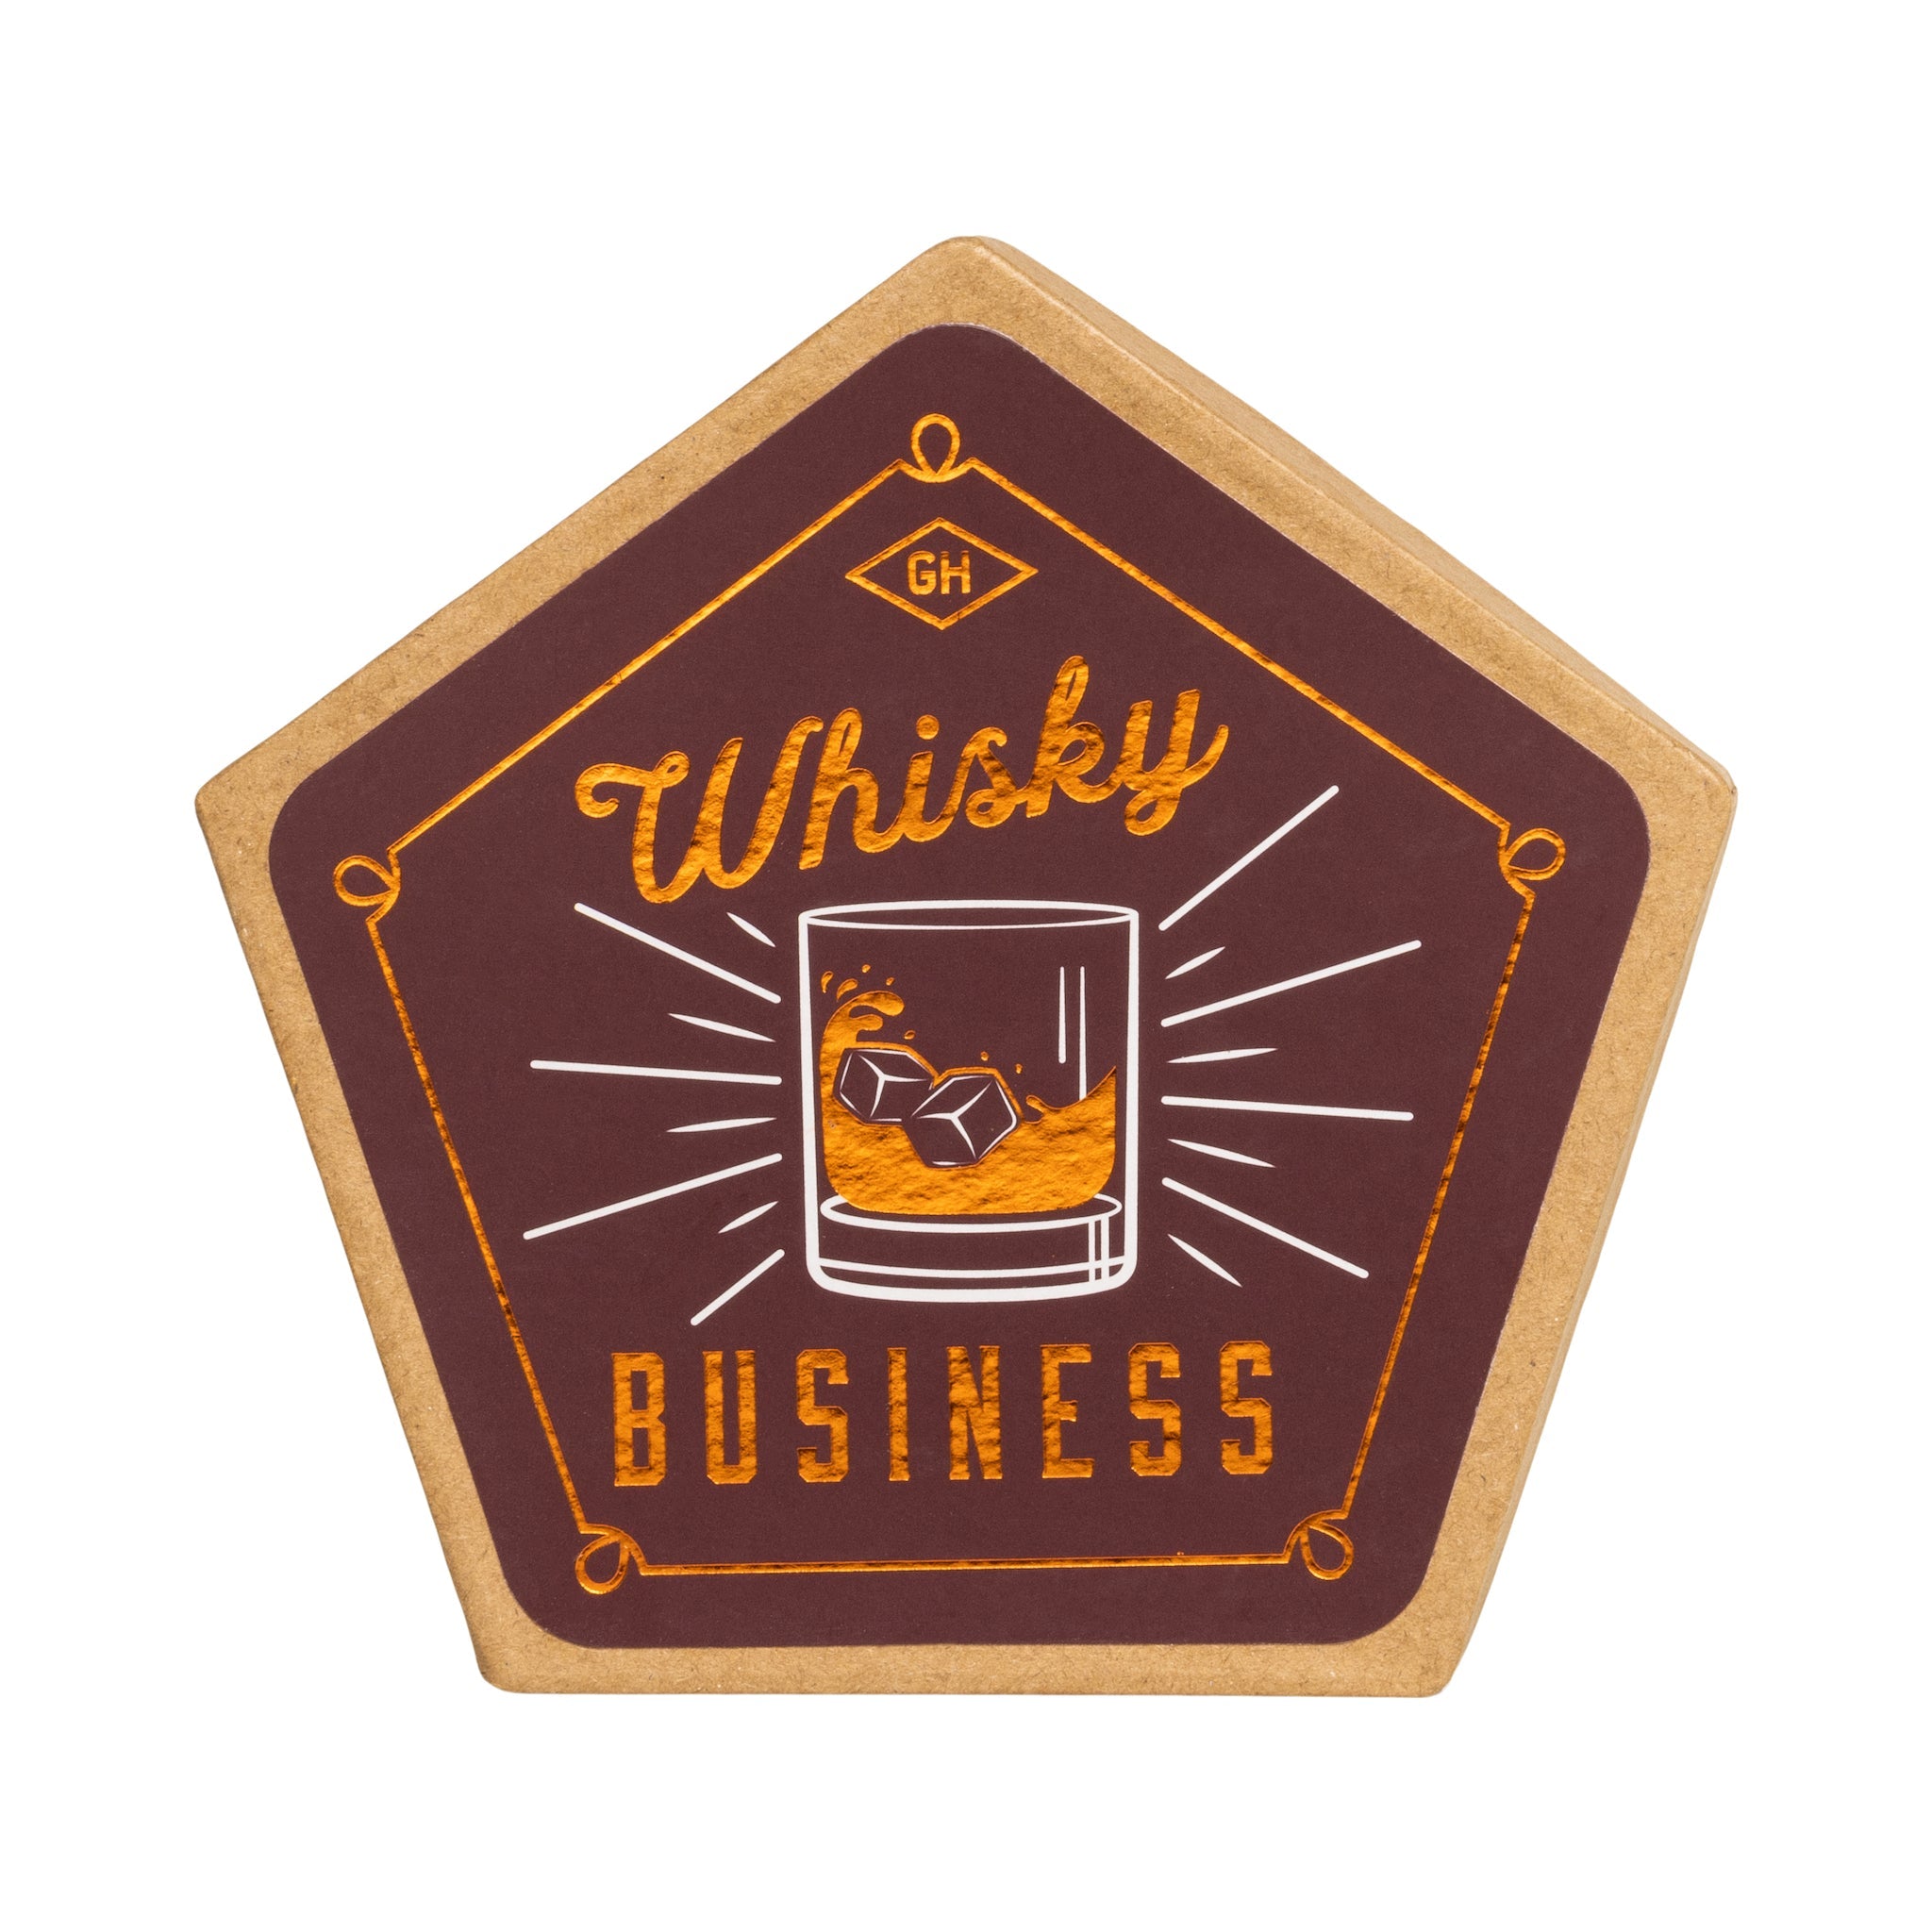 Whisky Business Ceramic Coaster Set